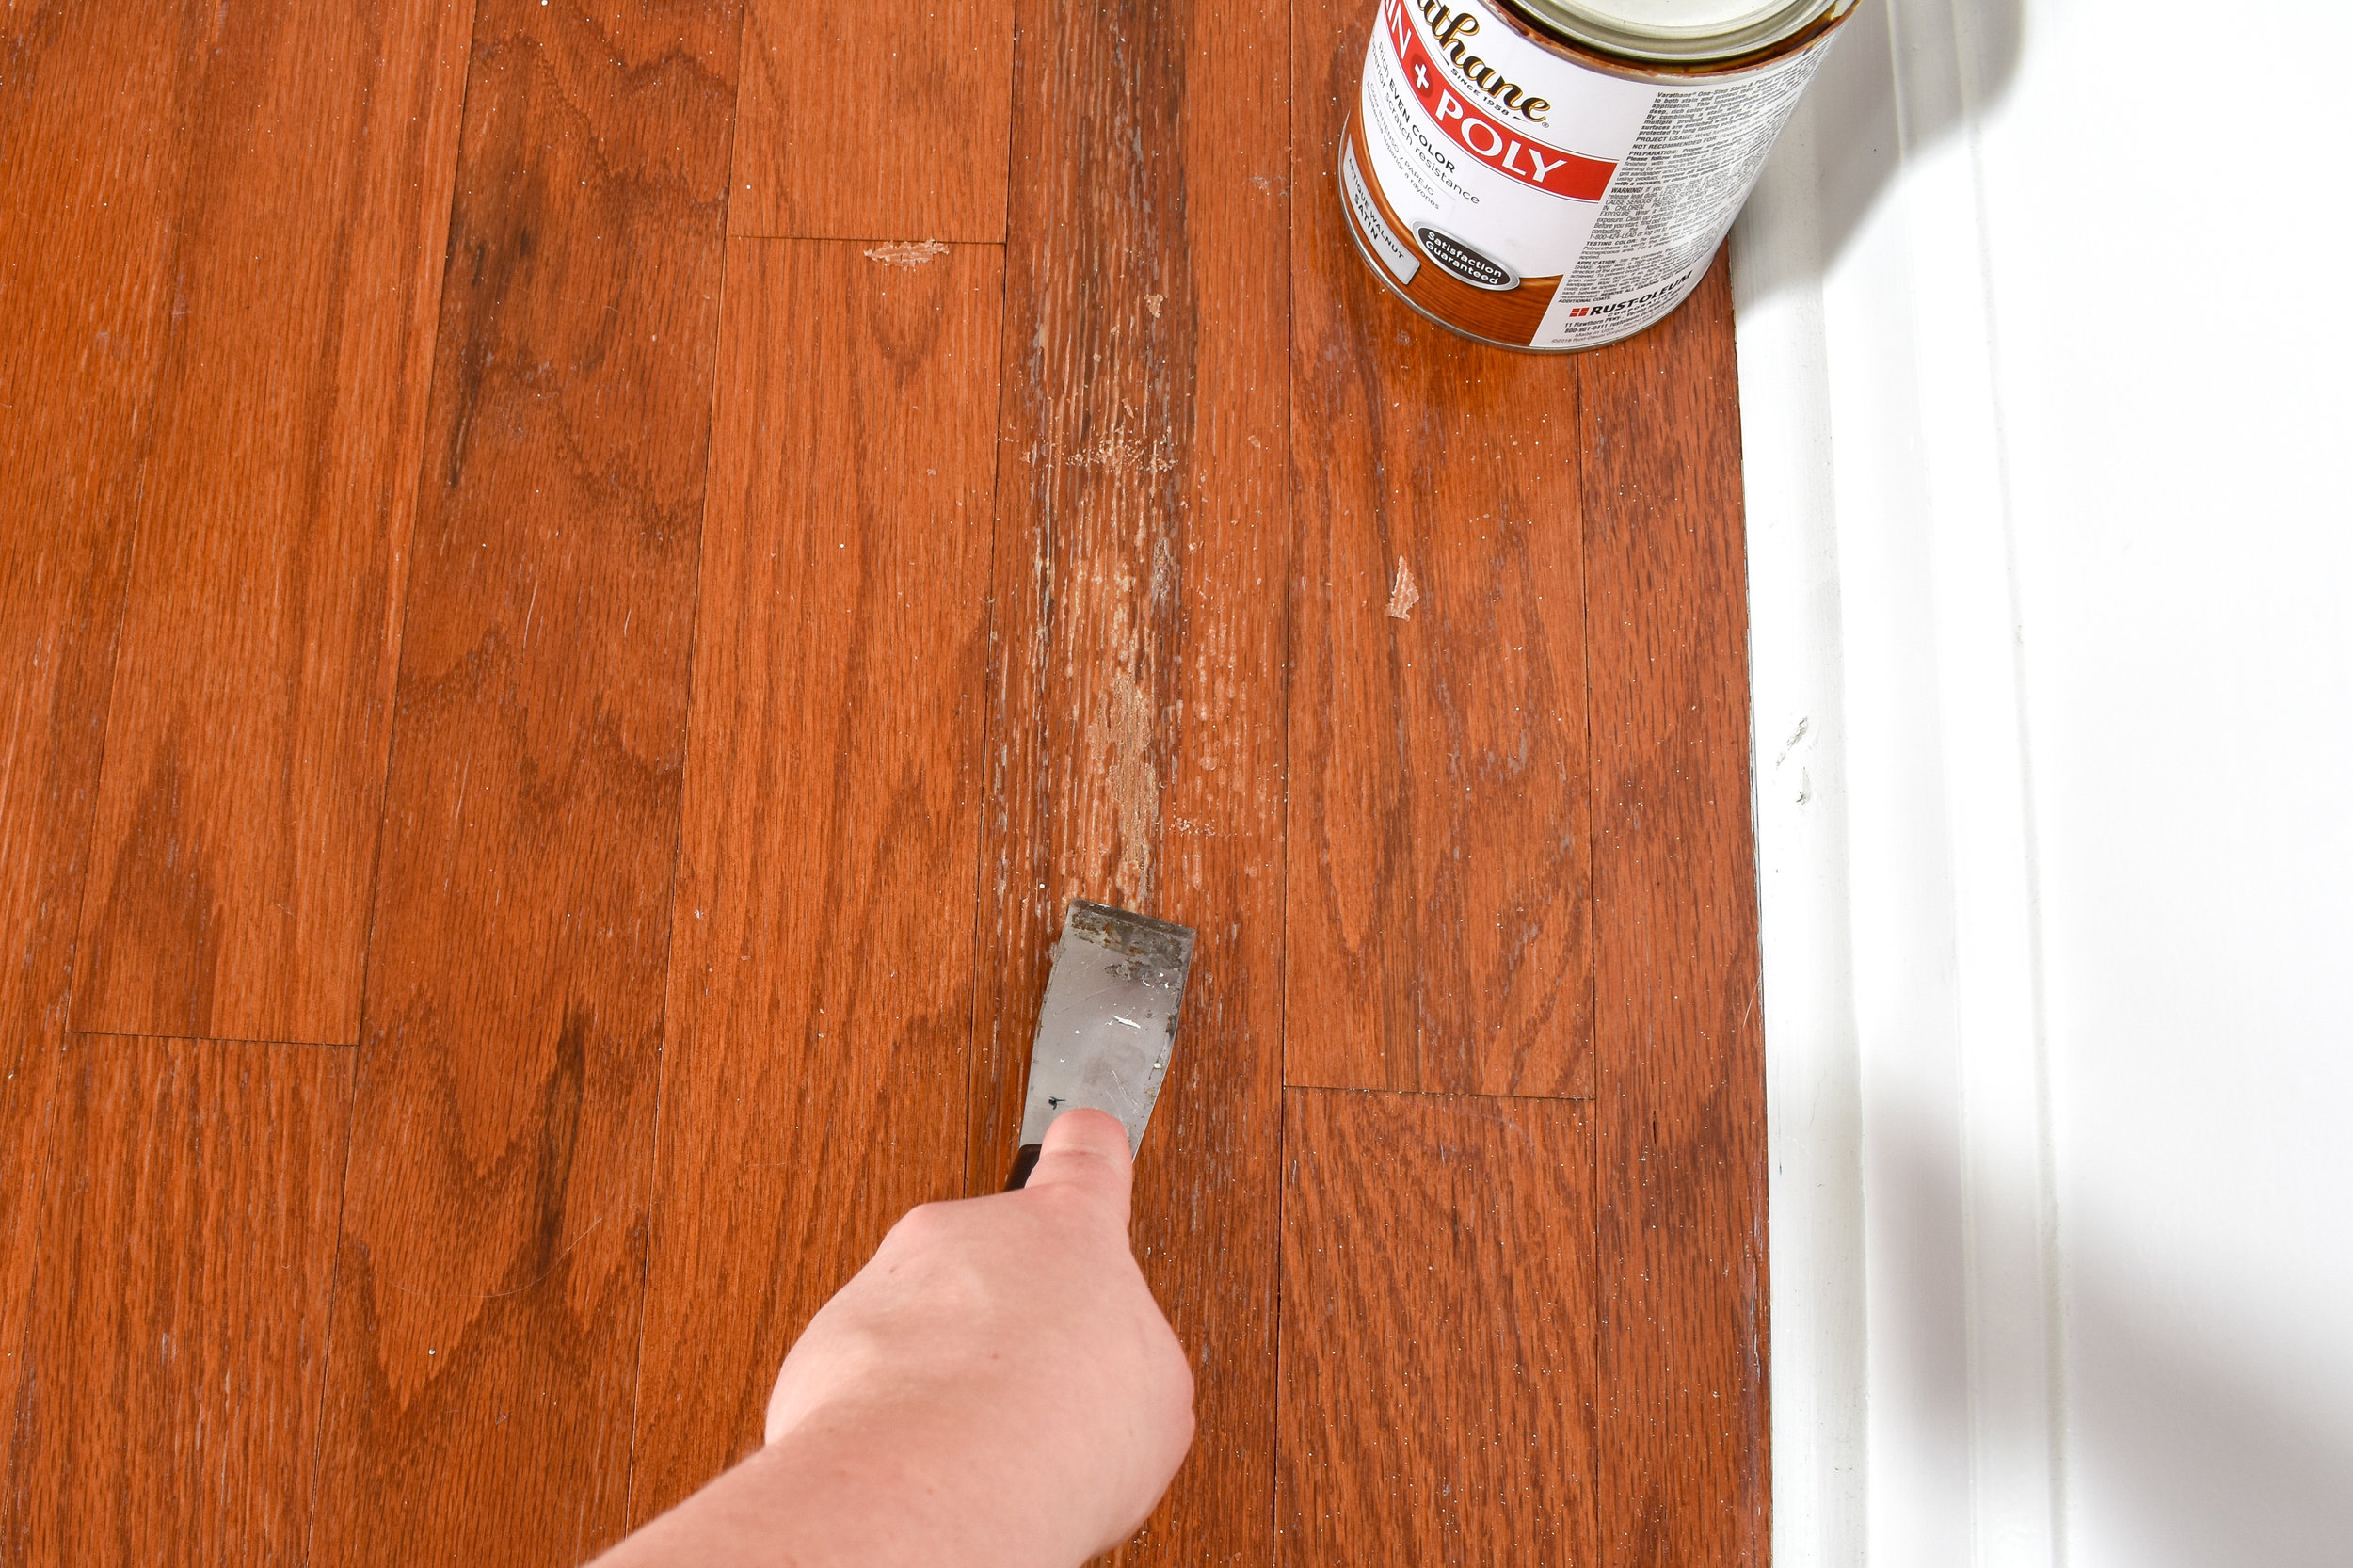 How To Make Old Hardwood Floors Shine, How To Make Old Hardwood Floors Shine